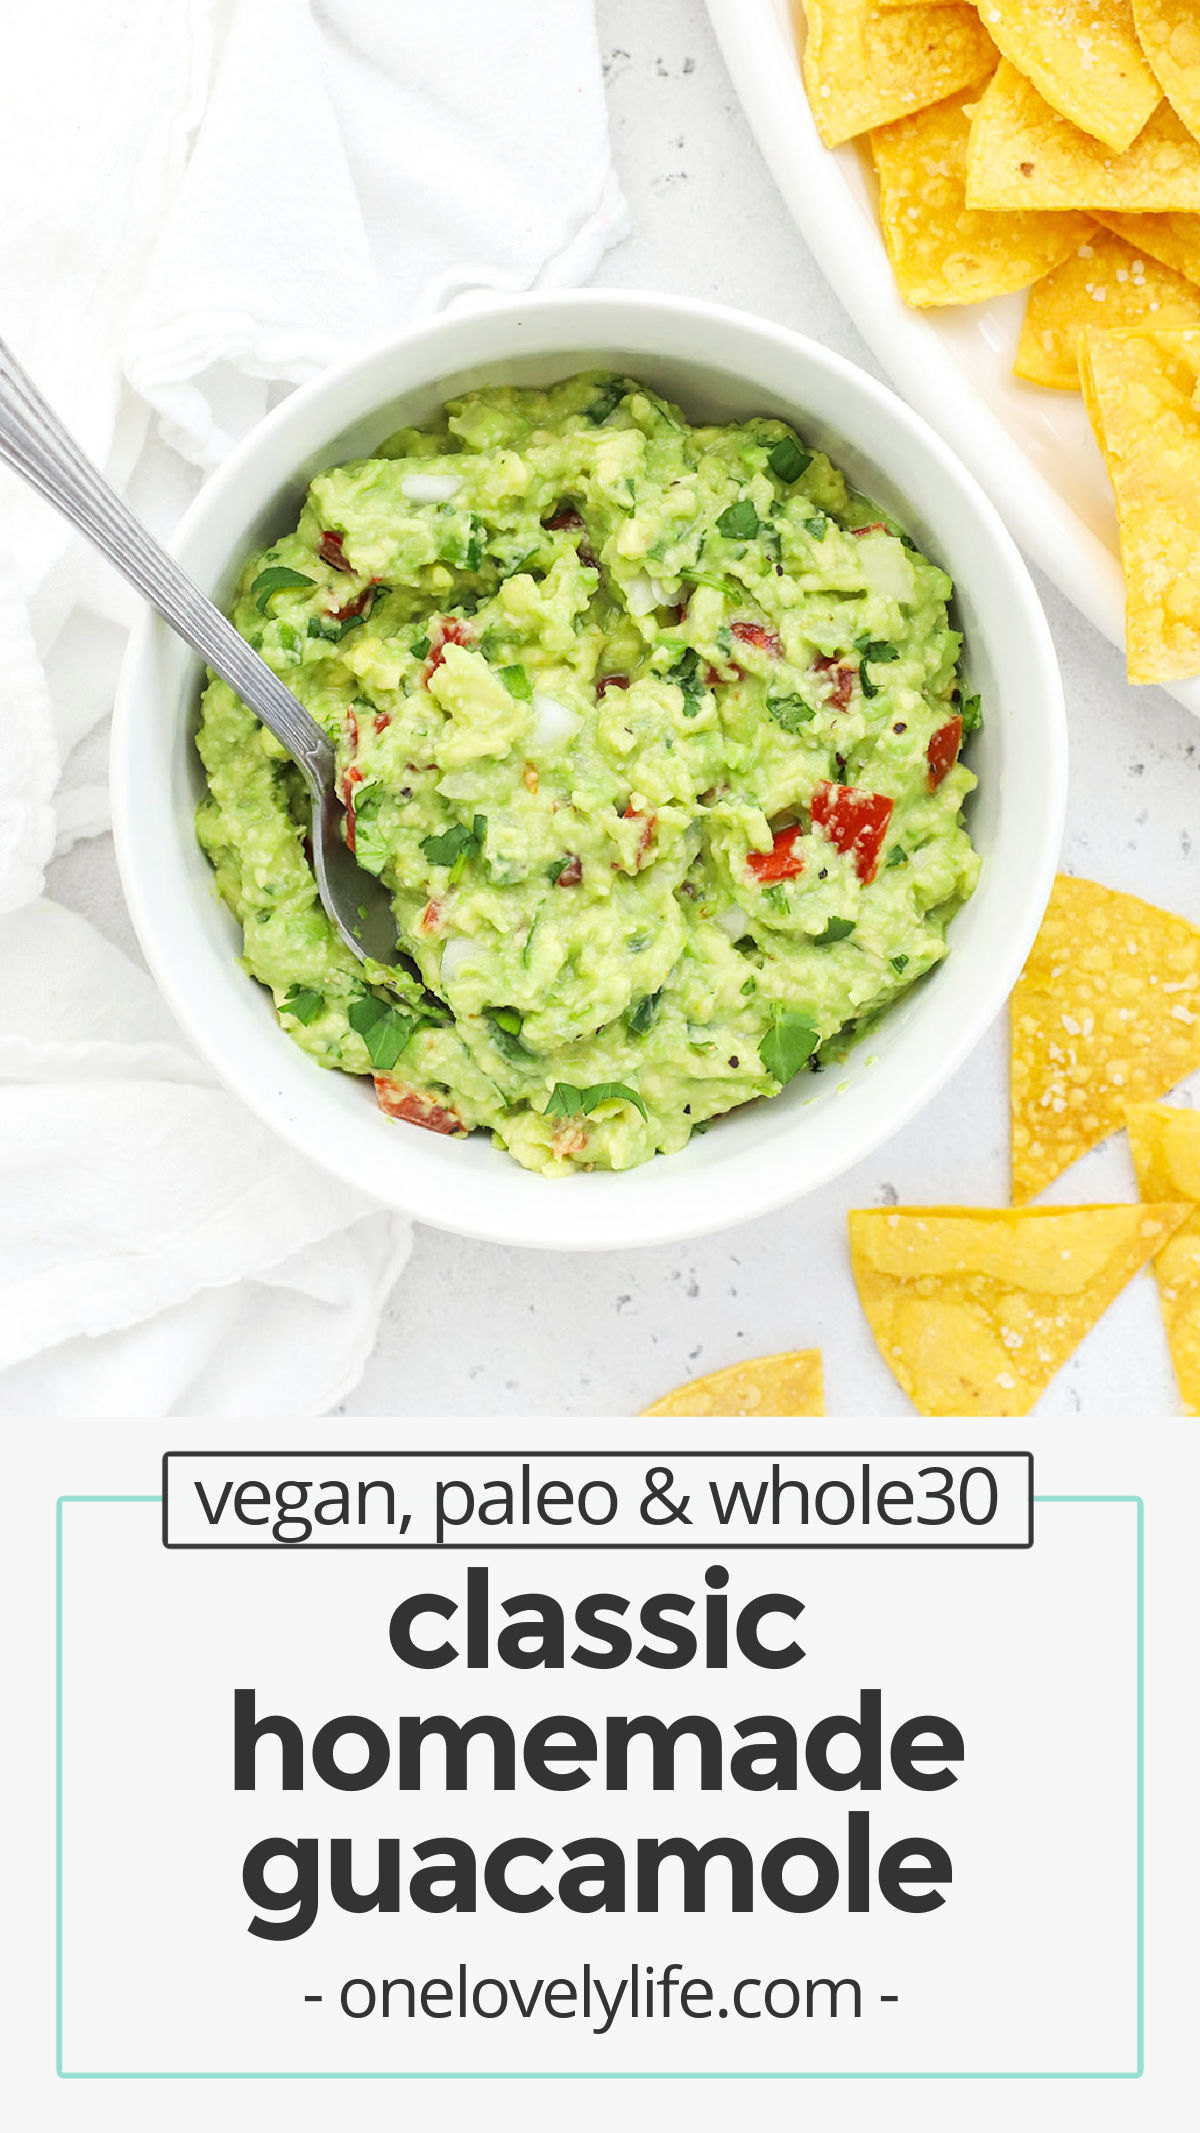 Easy Homemade Guacamole - This classic guacamole recipe has all the flavor you love. Add some chips & you have an instant party! // easy guacamole // chips and guacamole // chips and guac // classic guac // the best guacamole // simple guacamole // tex-mex // paleo // vegan // gluten-free // vegetarian // whole30 // healthy dip // avocado dip //